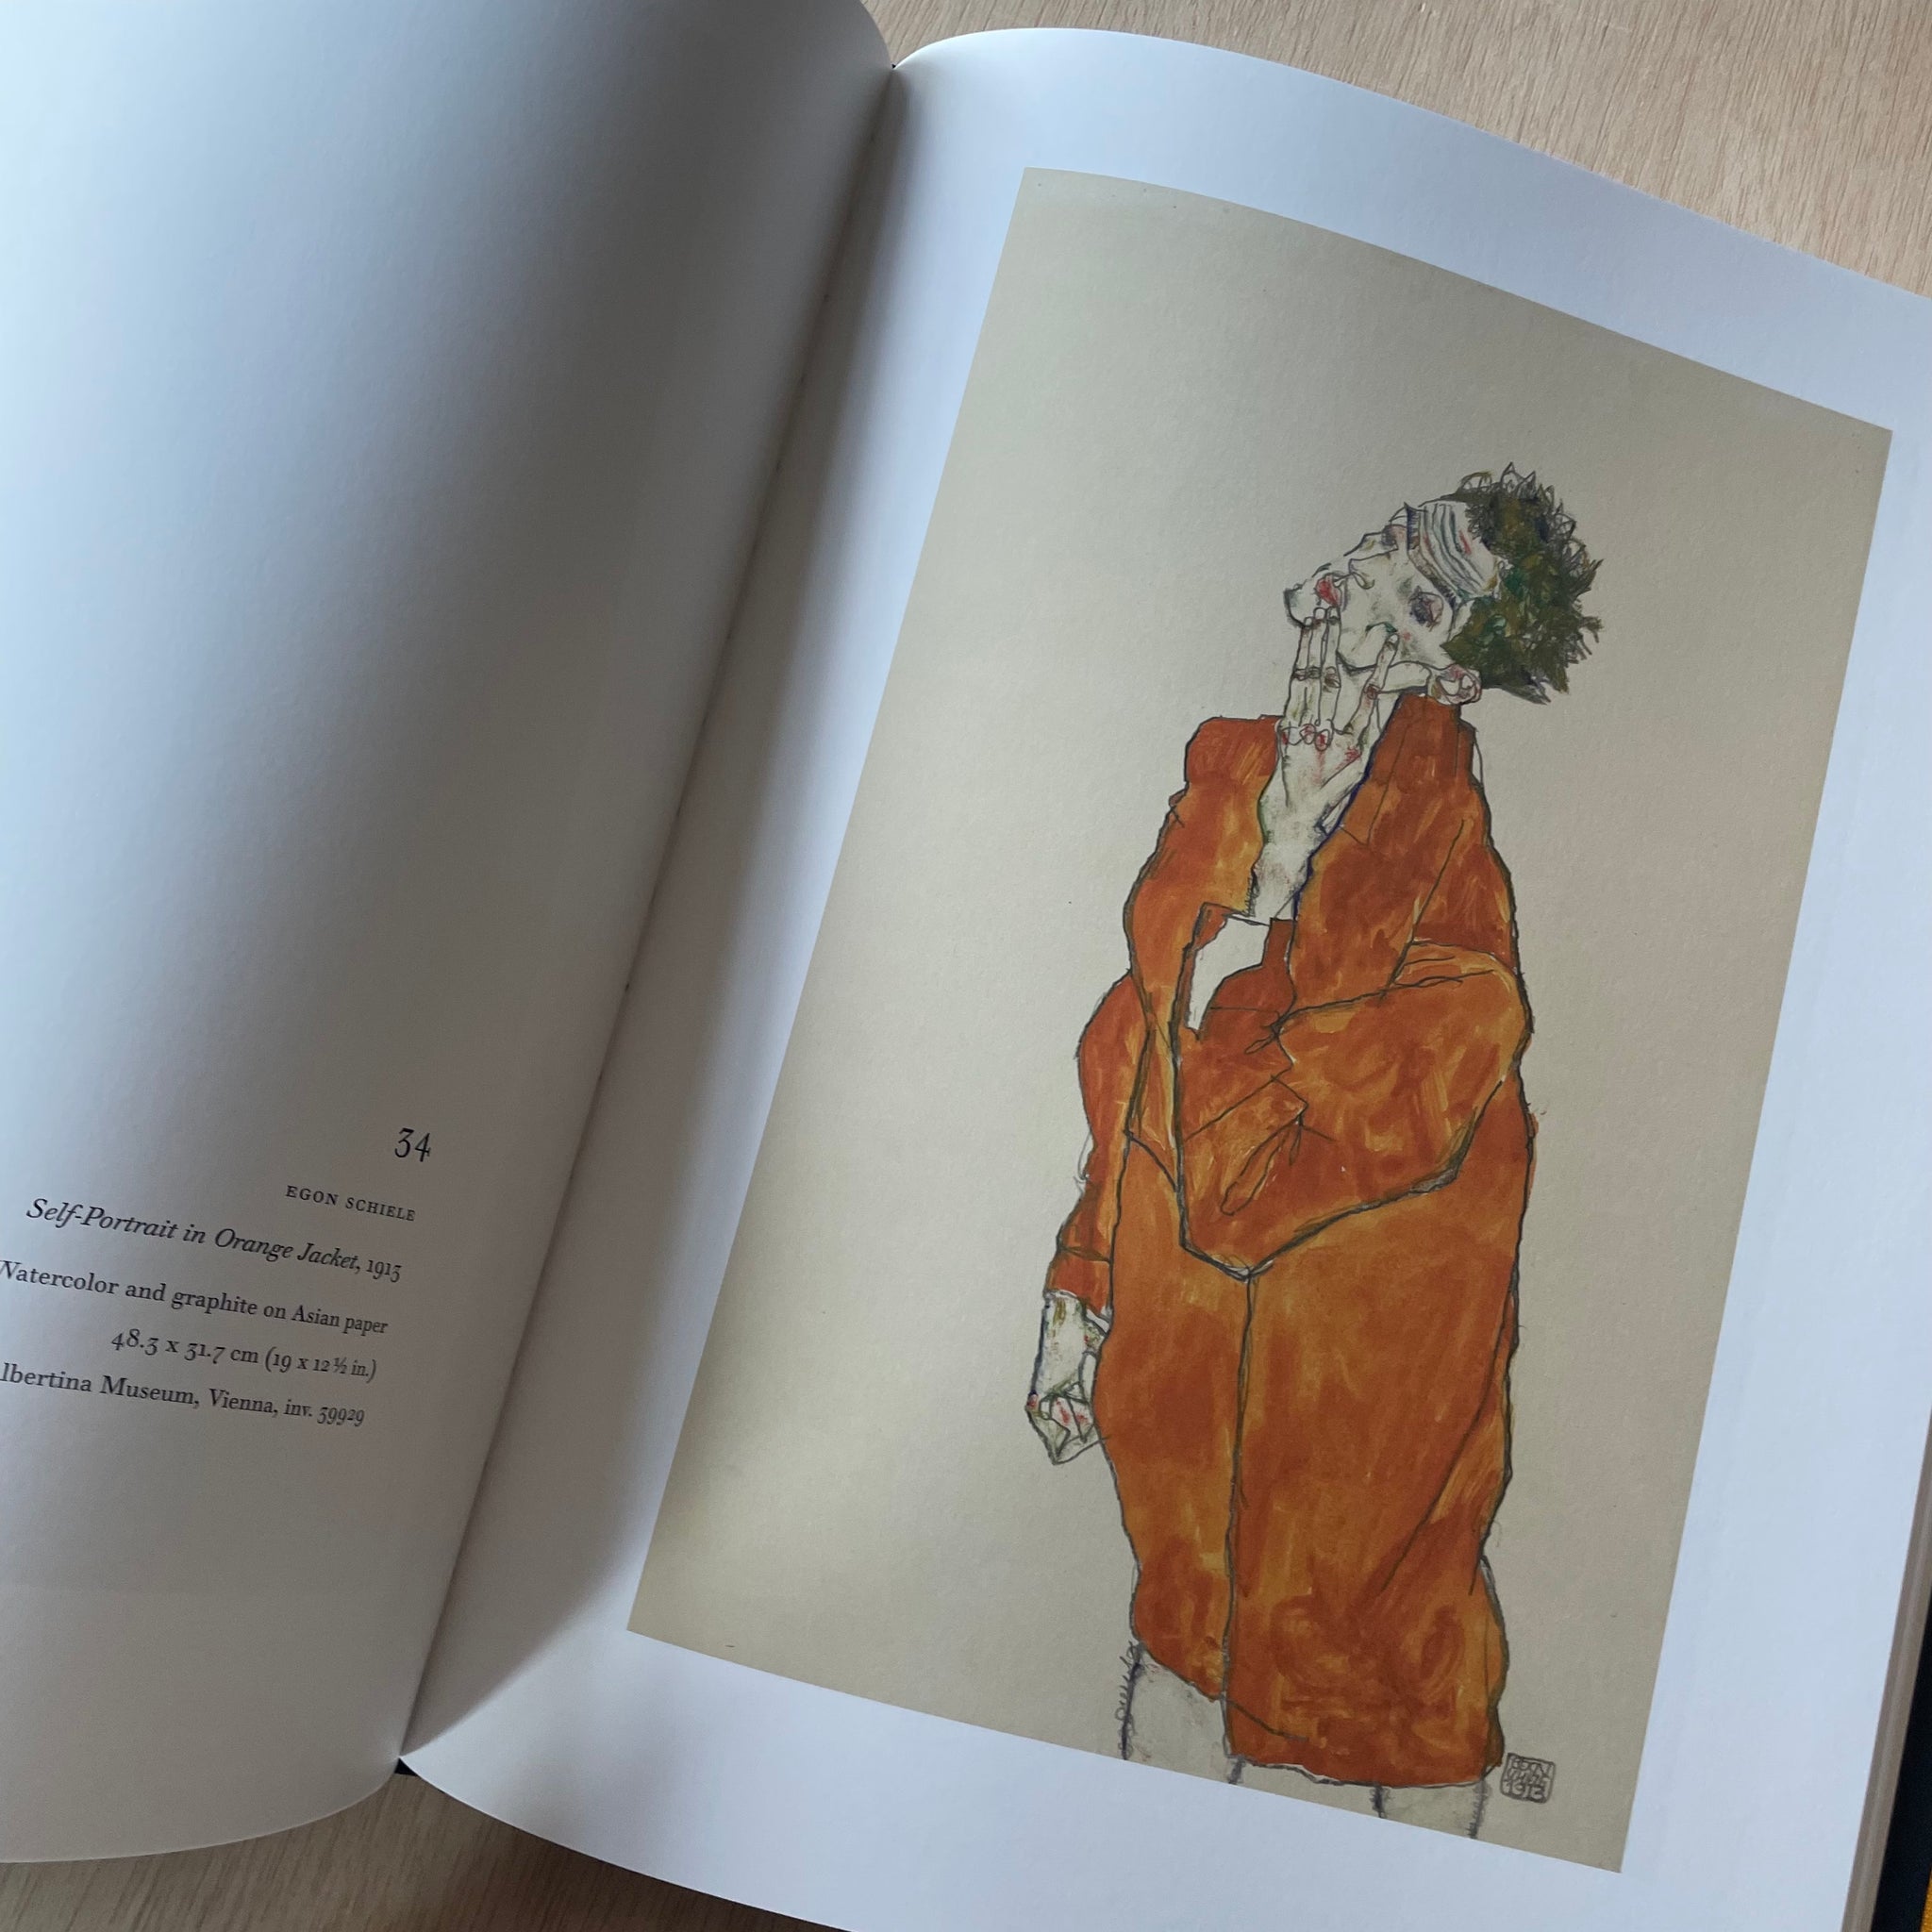 Klimt and Schiele: Drawings